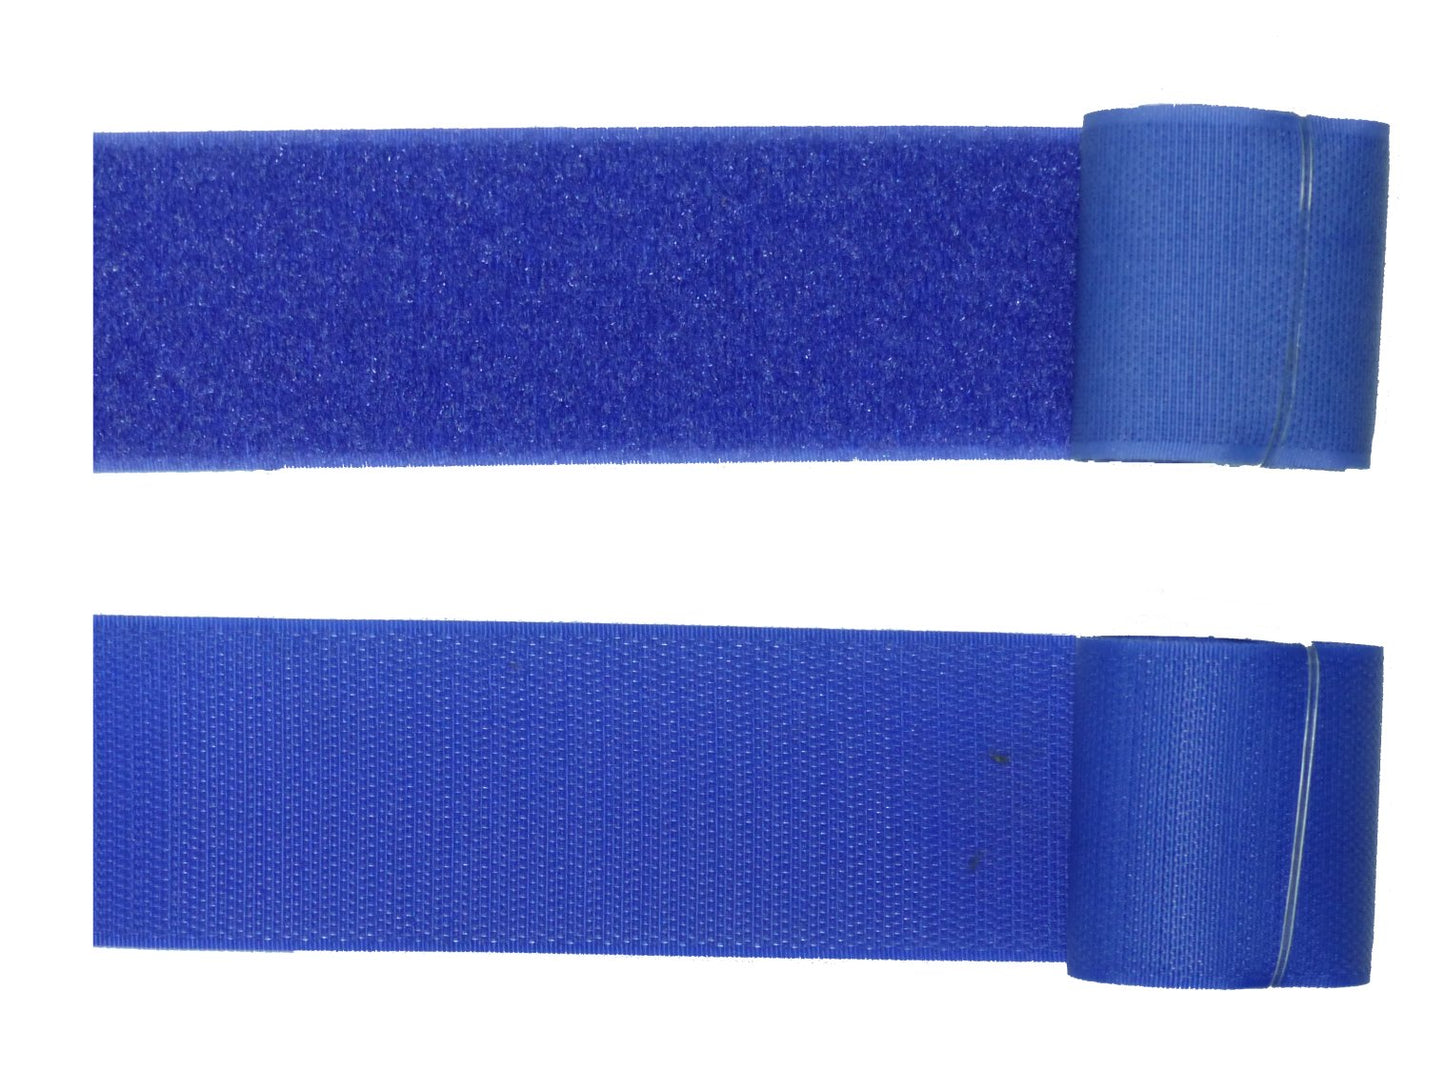 Benristraps 50mm sewable hook and loop tape in blue